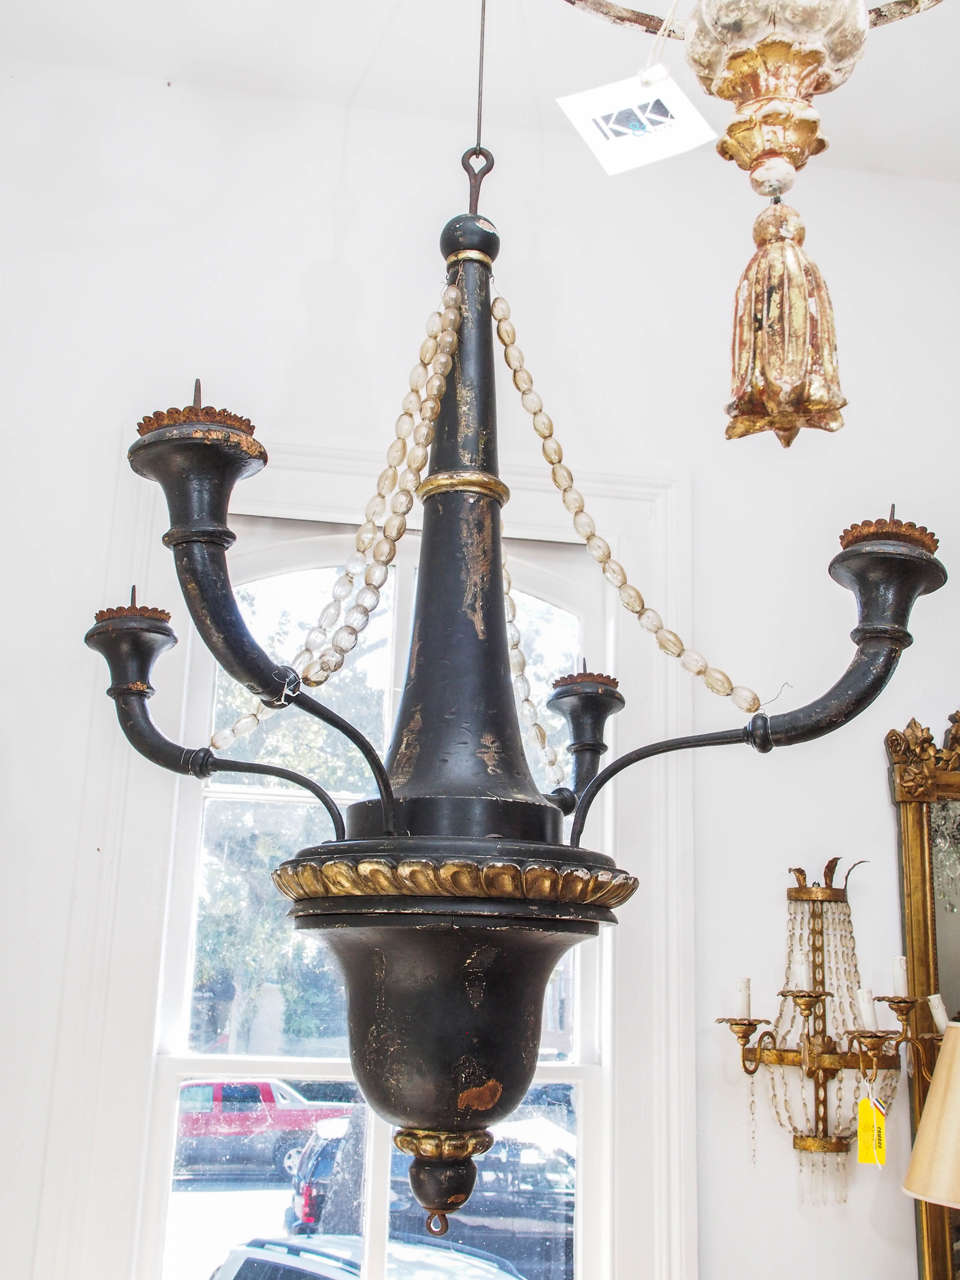 19th century chandelier with handblown glass beads.